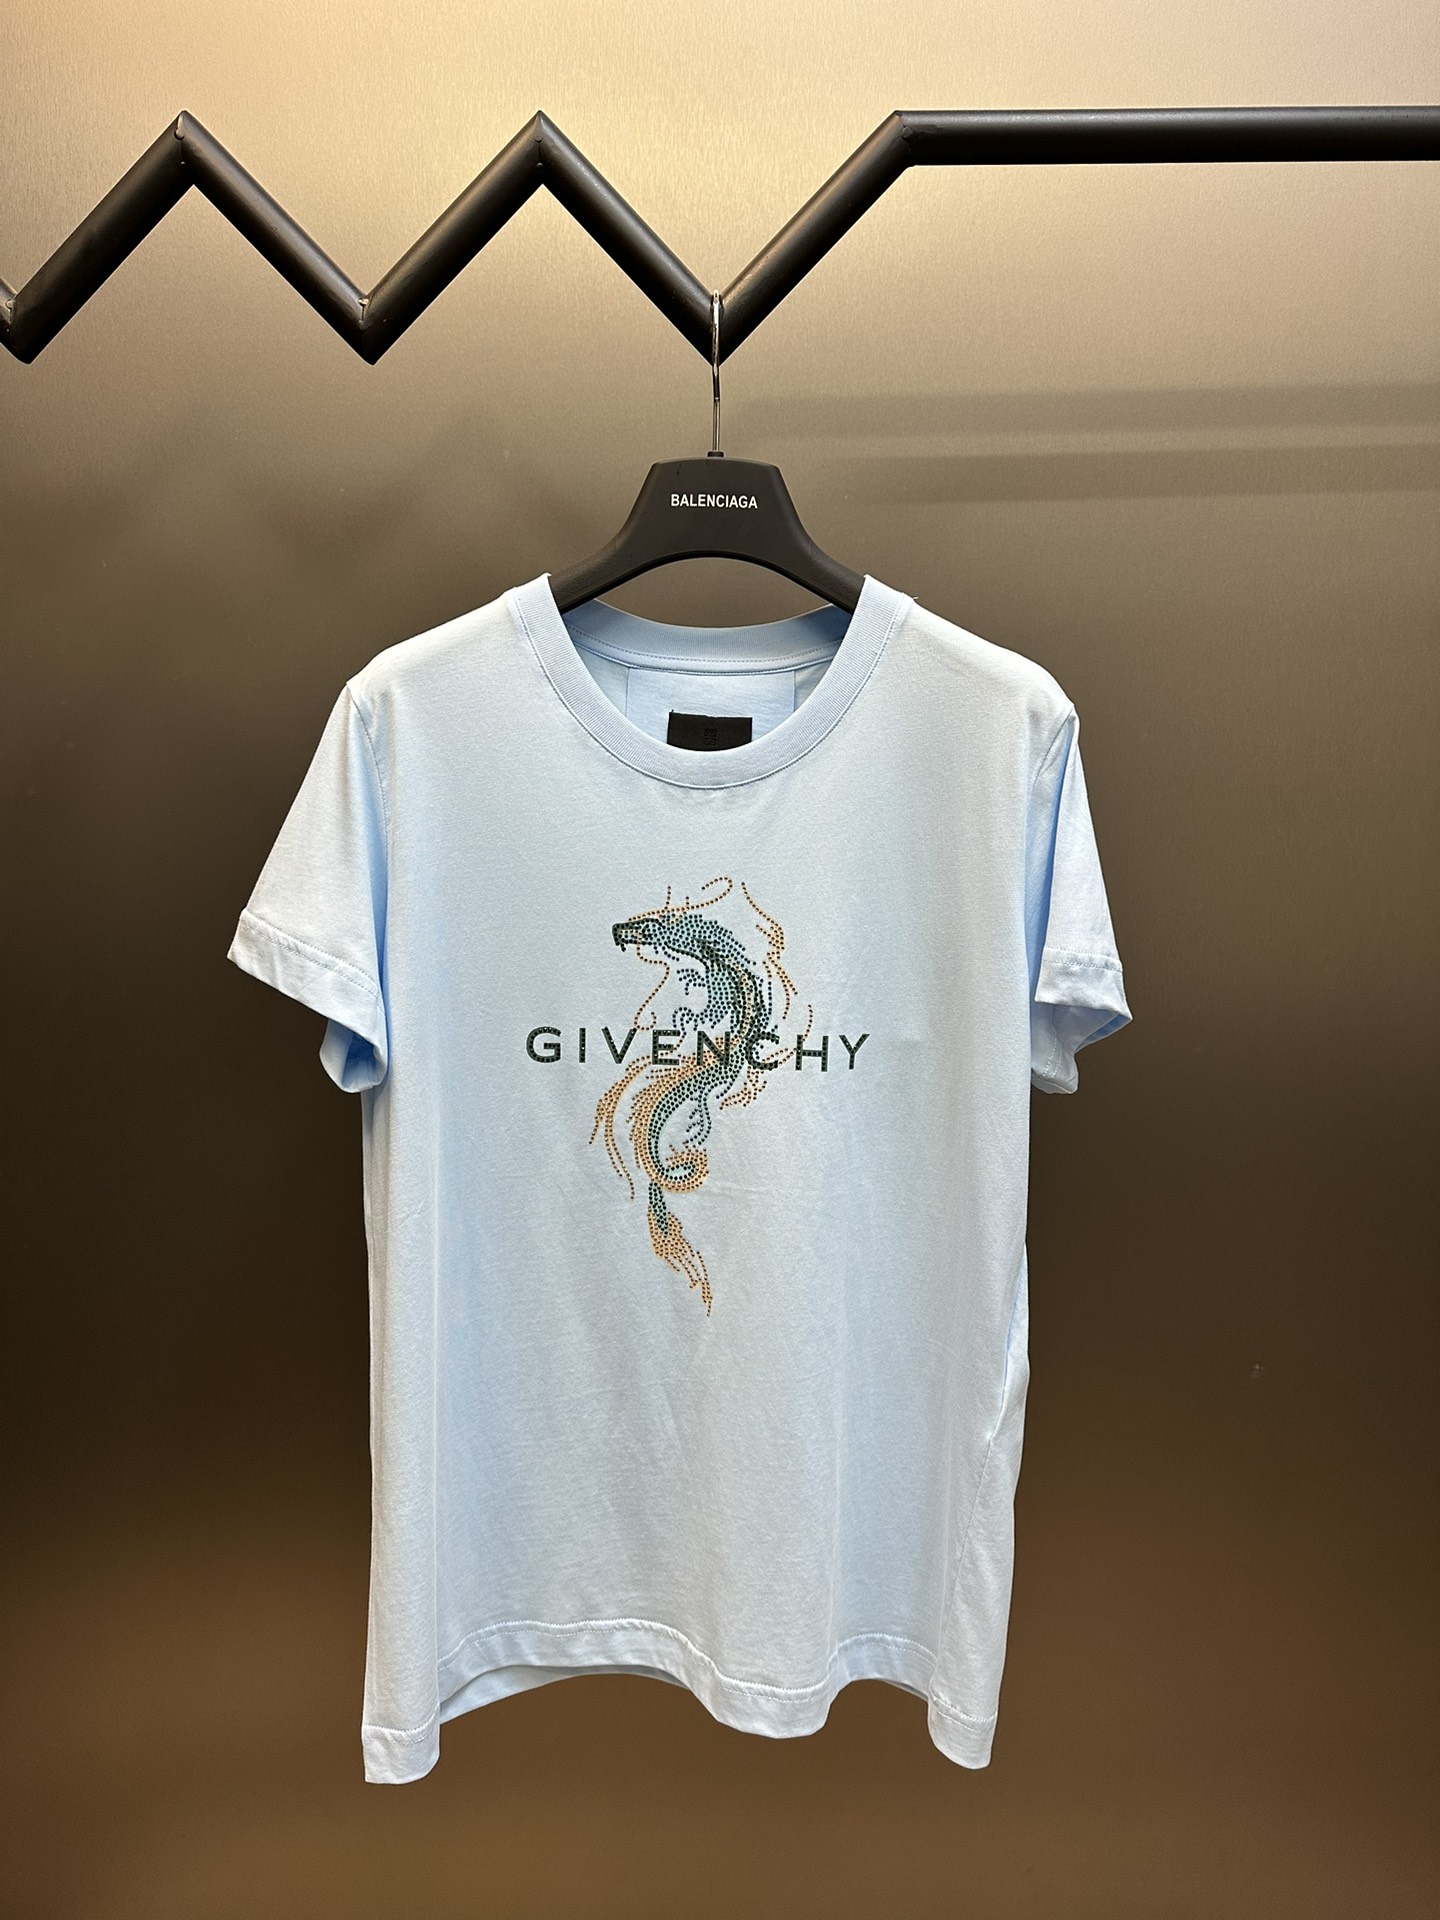 Givenchy Clothing T-Shirt Women Cotton Short Sleeve